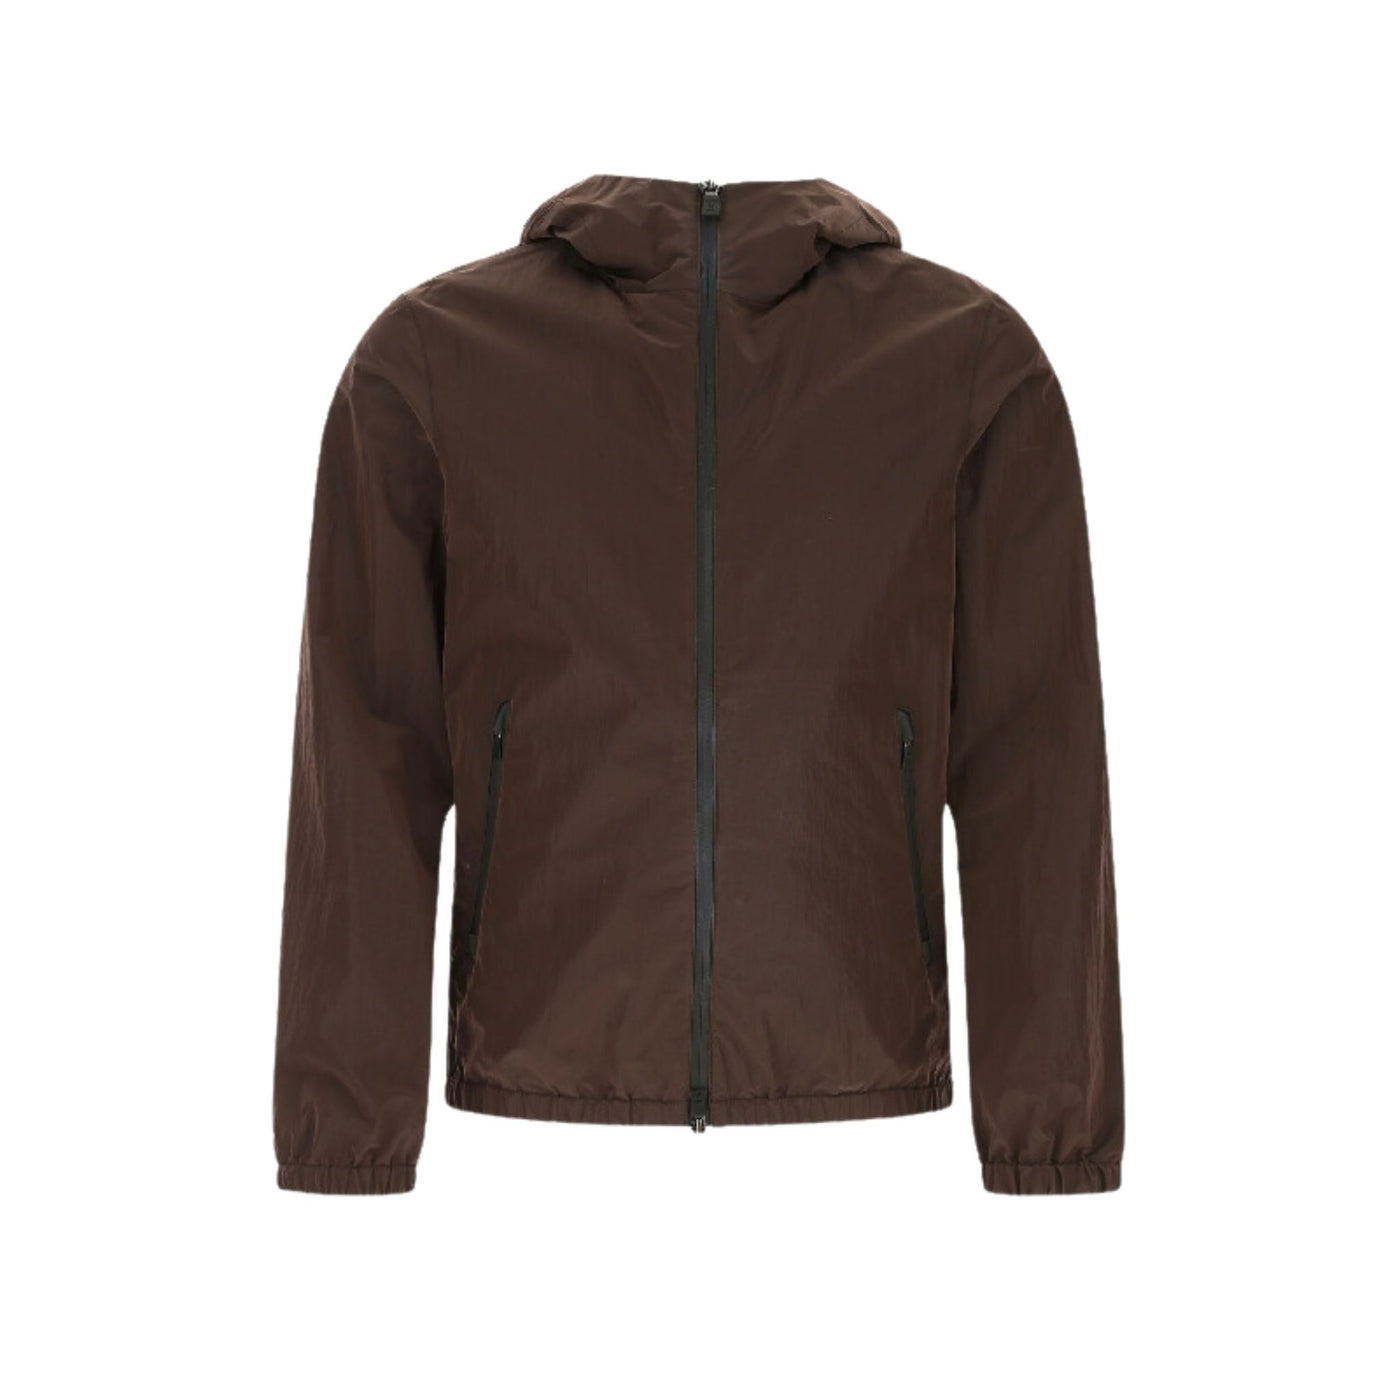 Men's waterproof jacket in brown nylon